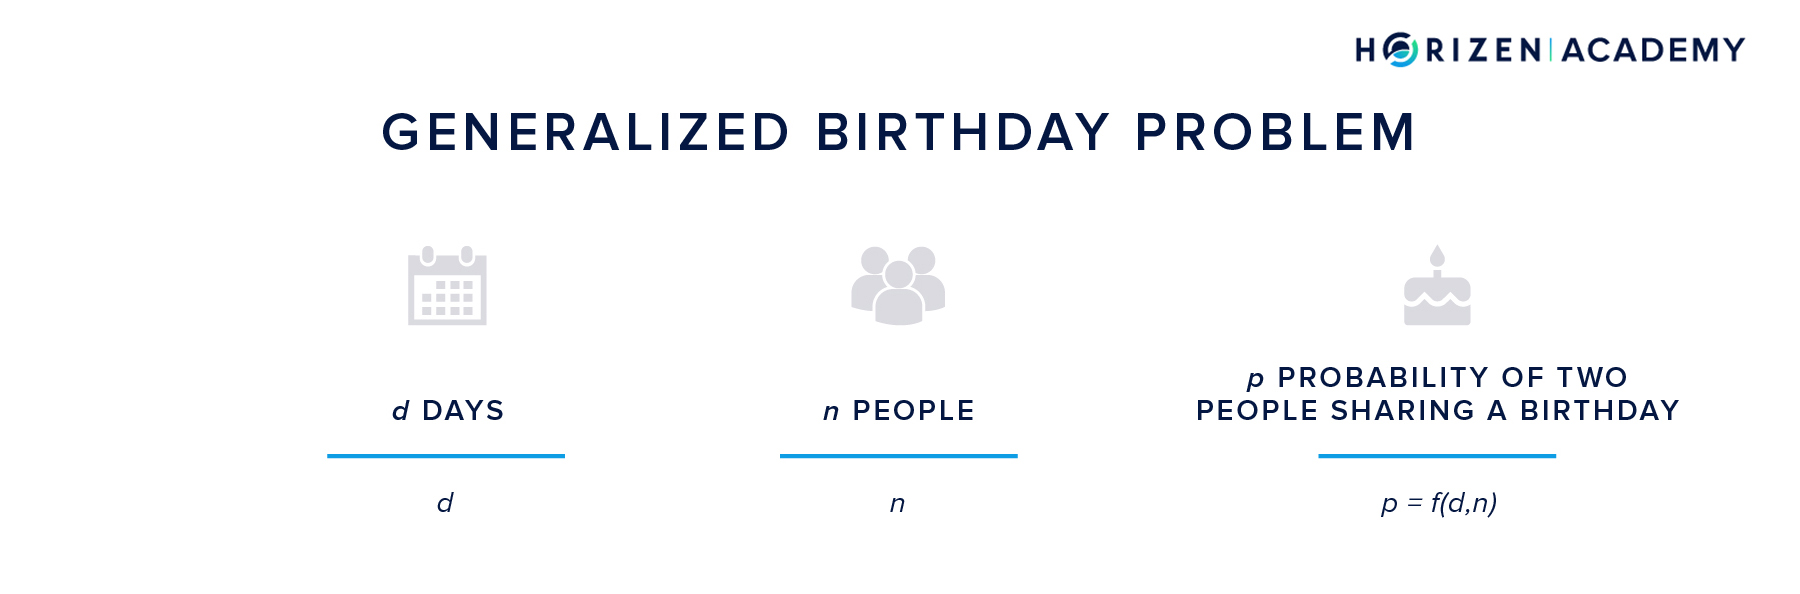 The Generalized Birthday Problem